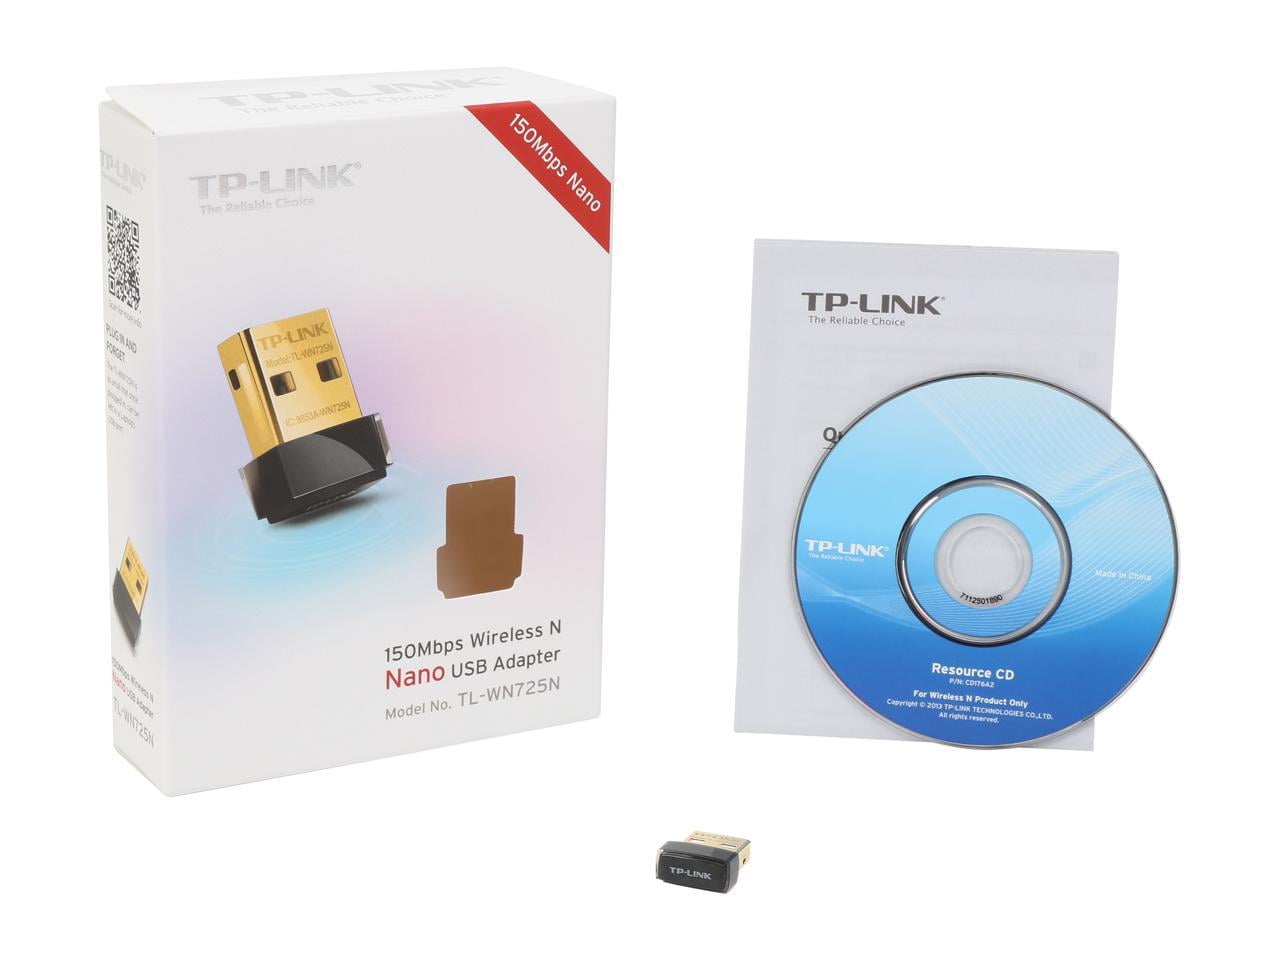 & TP-LINK Wireless 64 in TL-WN725N Adapter, 150Mbps, Nano Play bit N150 Plug 10 Windows WEP, WPA2, bit) & (32 WPA / IEEE 802.11b/g/n,